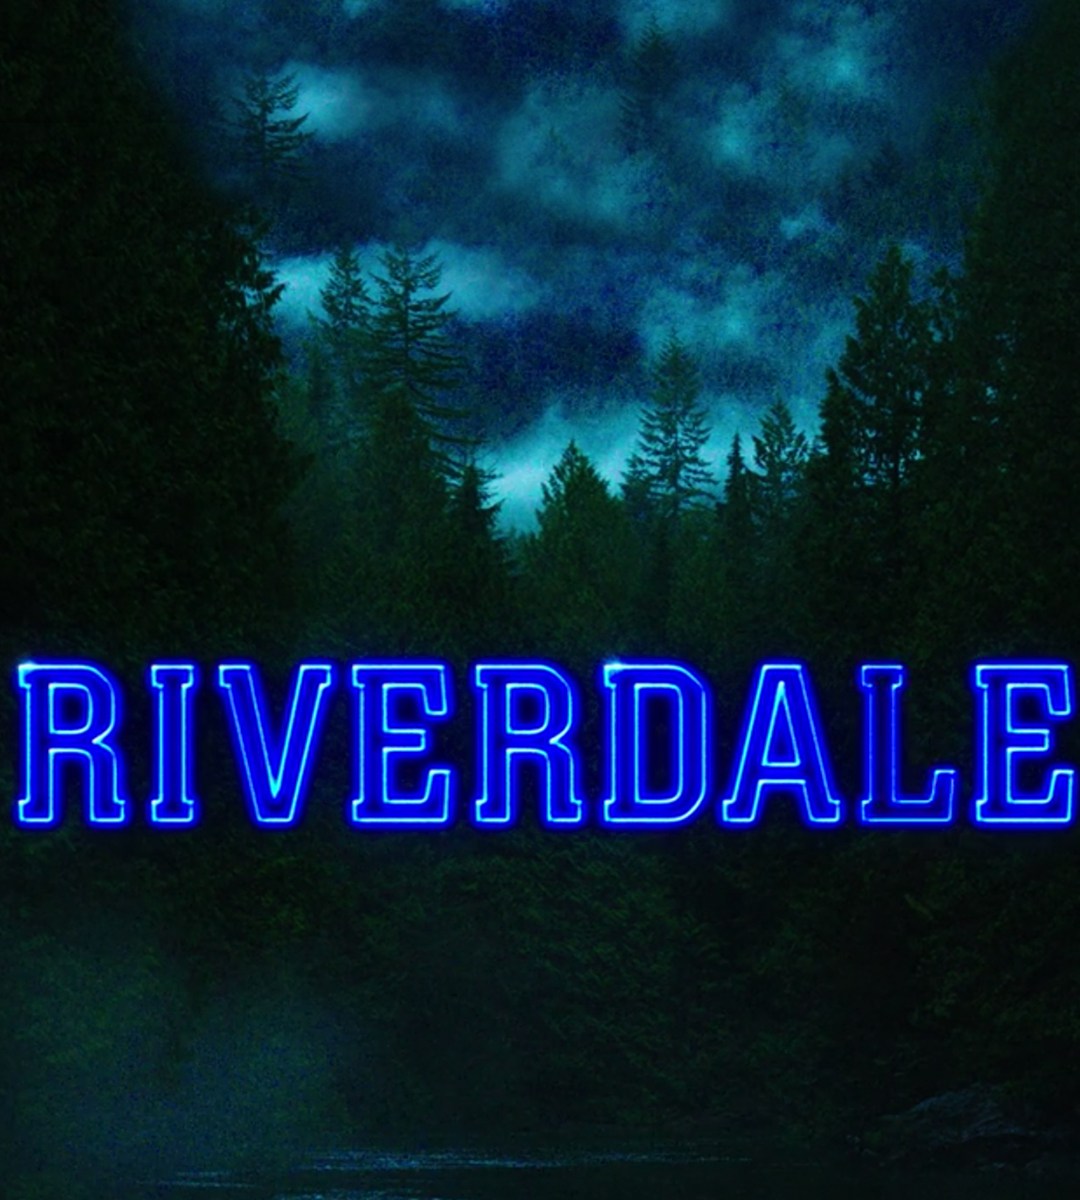 Riverdale Wallpaper: Cute Character